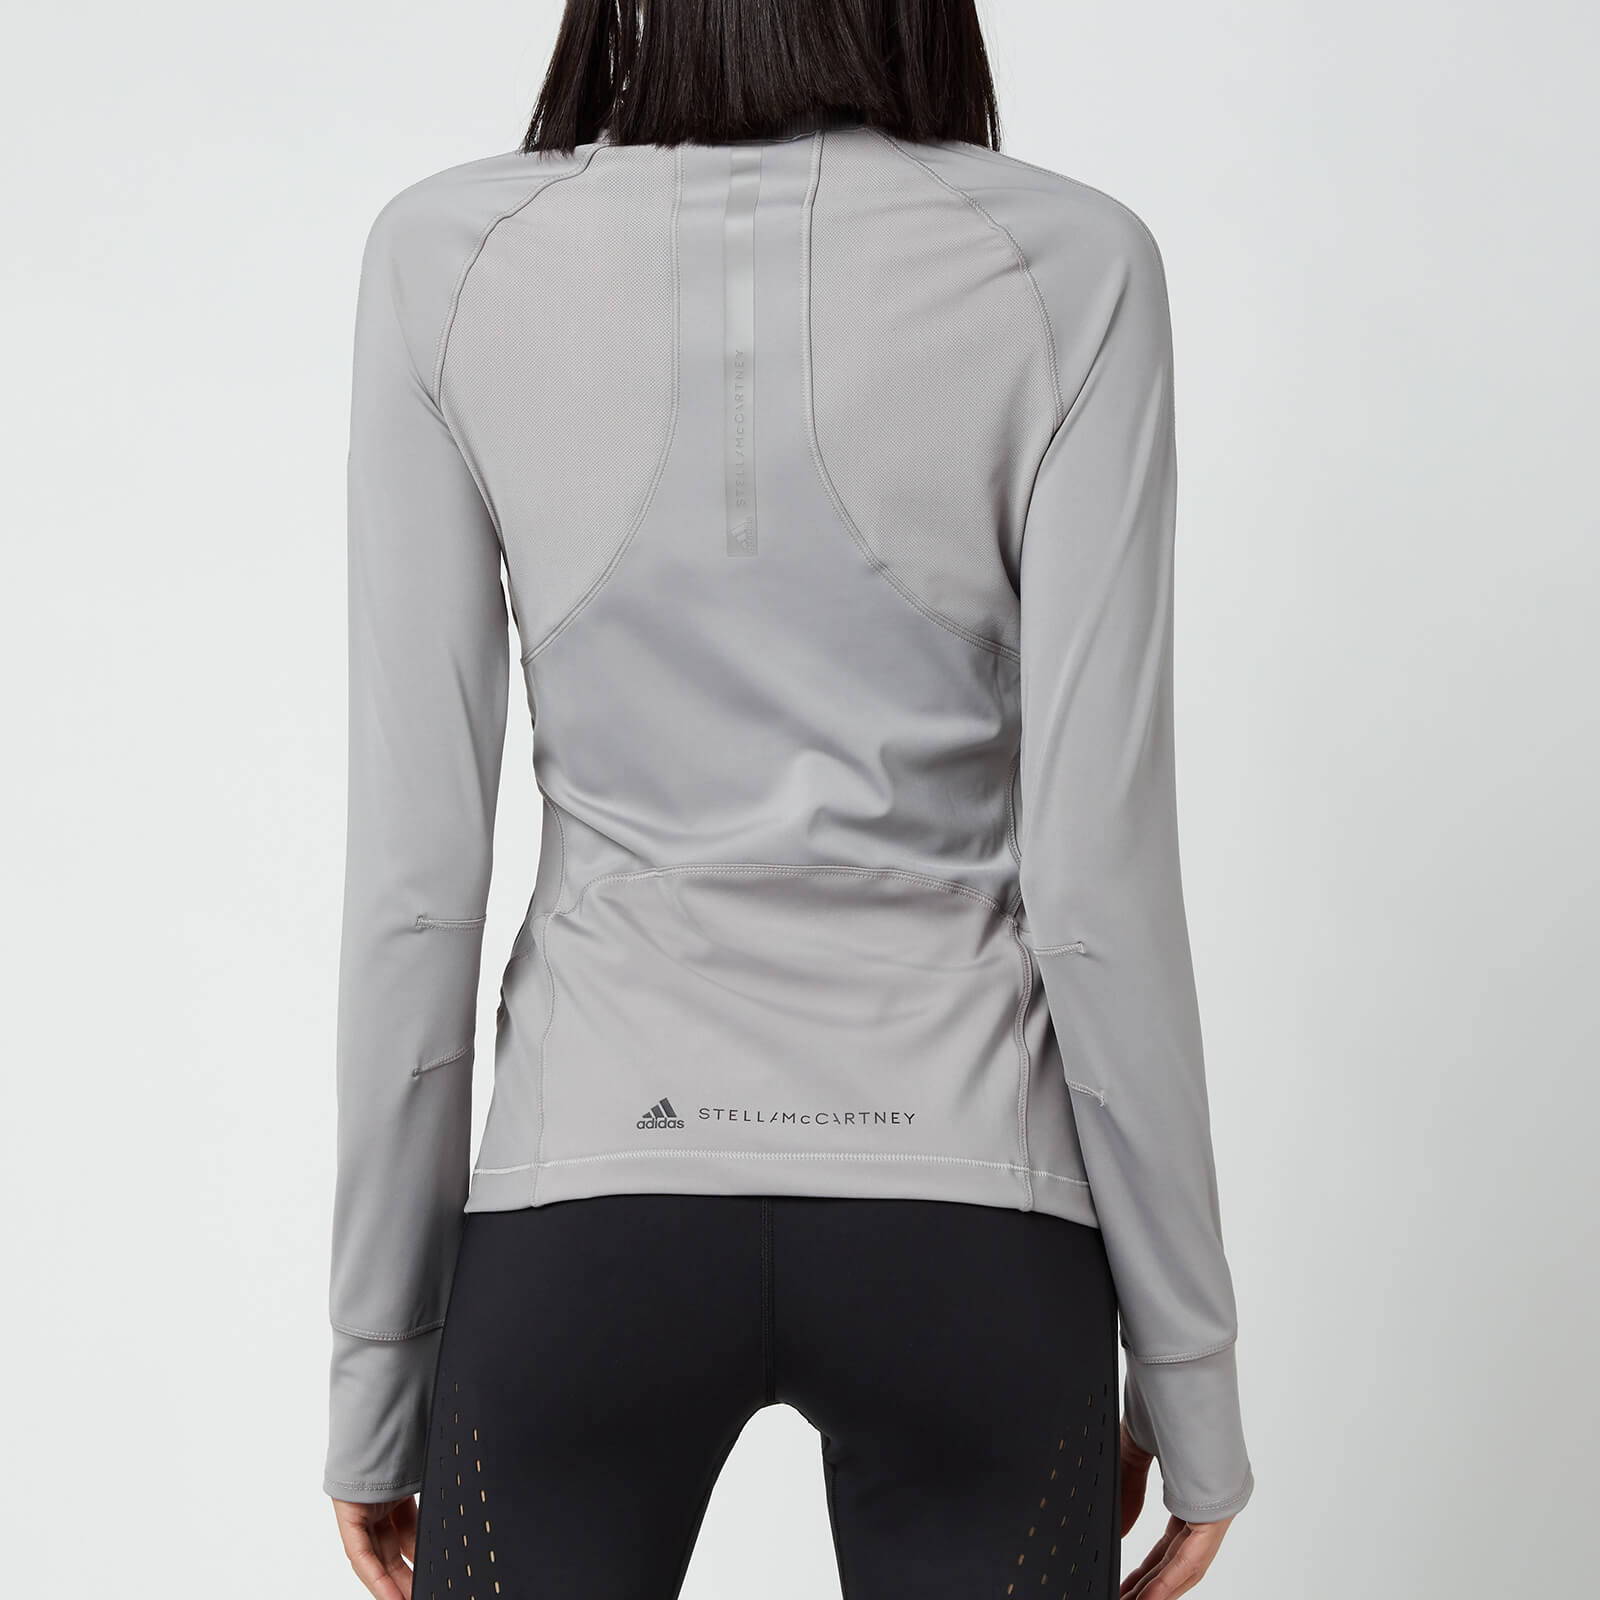 Adidas by Stella McCartney Women's Truepurpose Midlayer Jacket - Dove Grey - XS